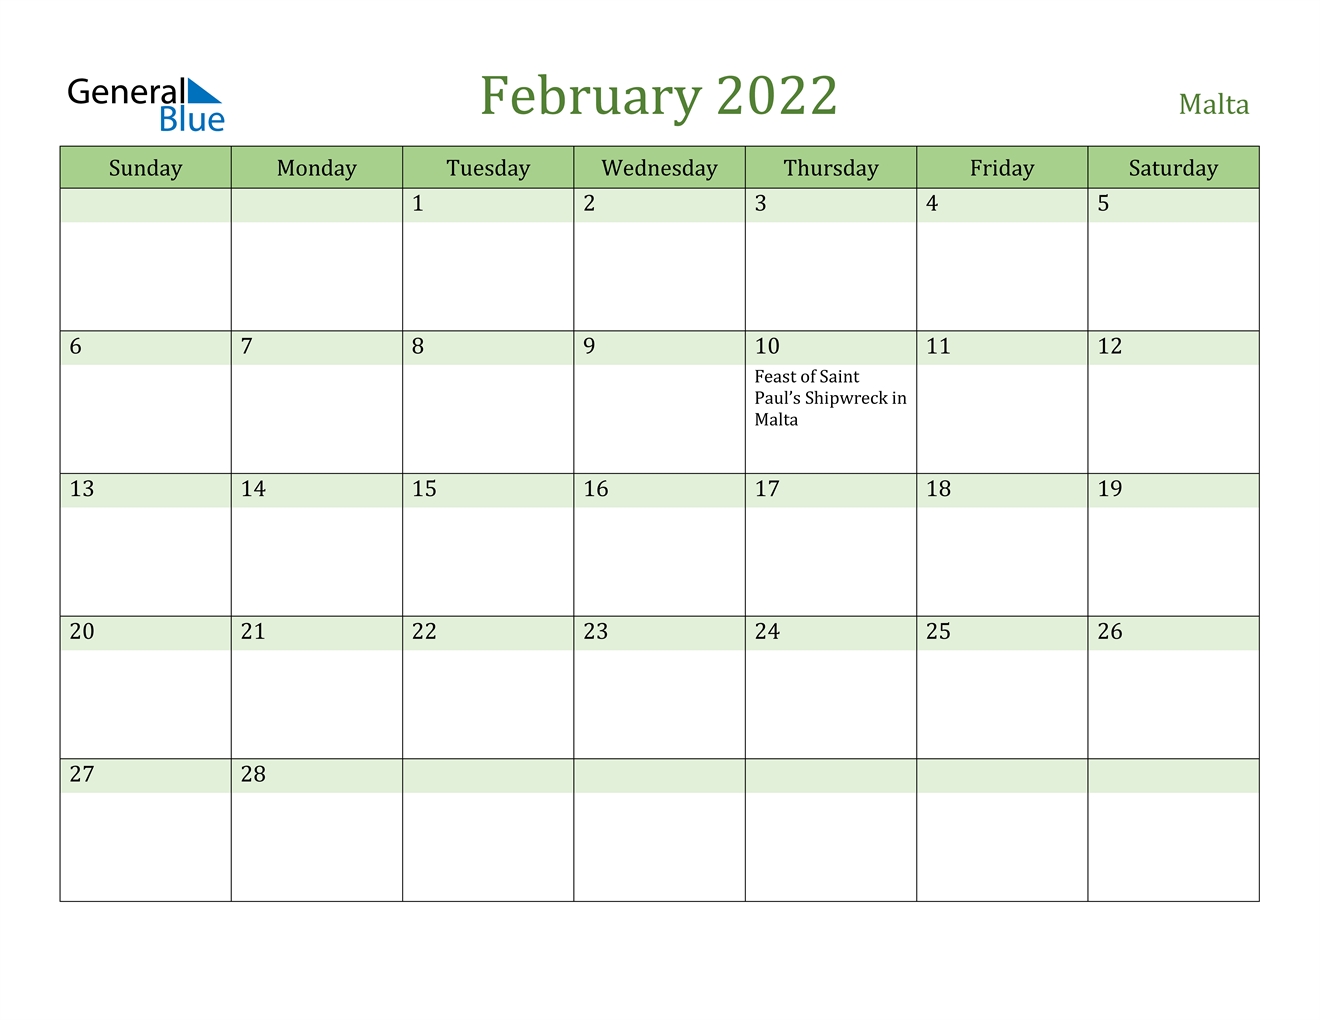 February 2022 Calendar - Malta